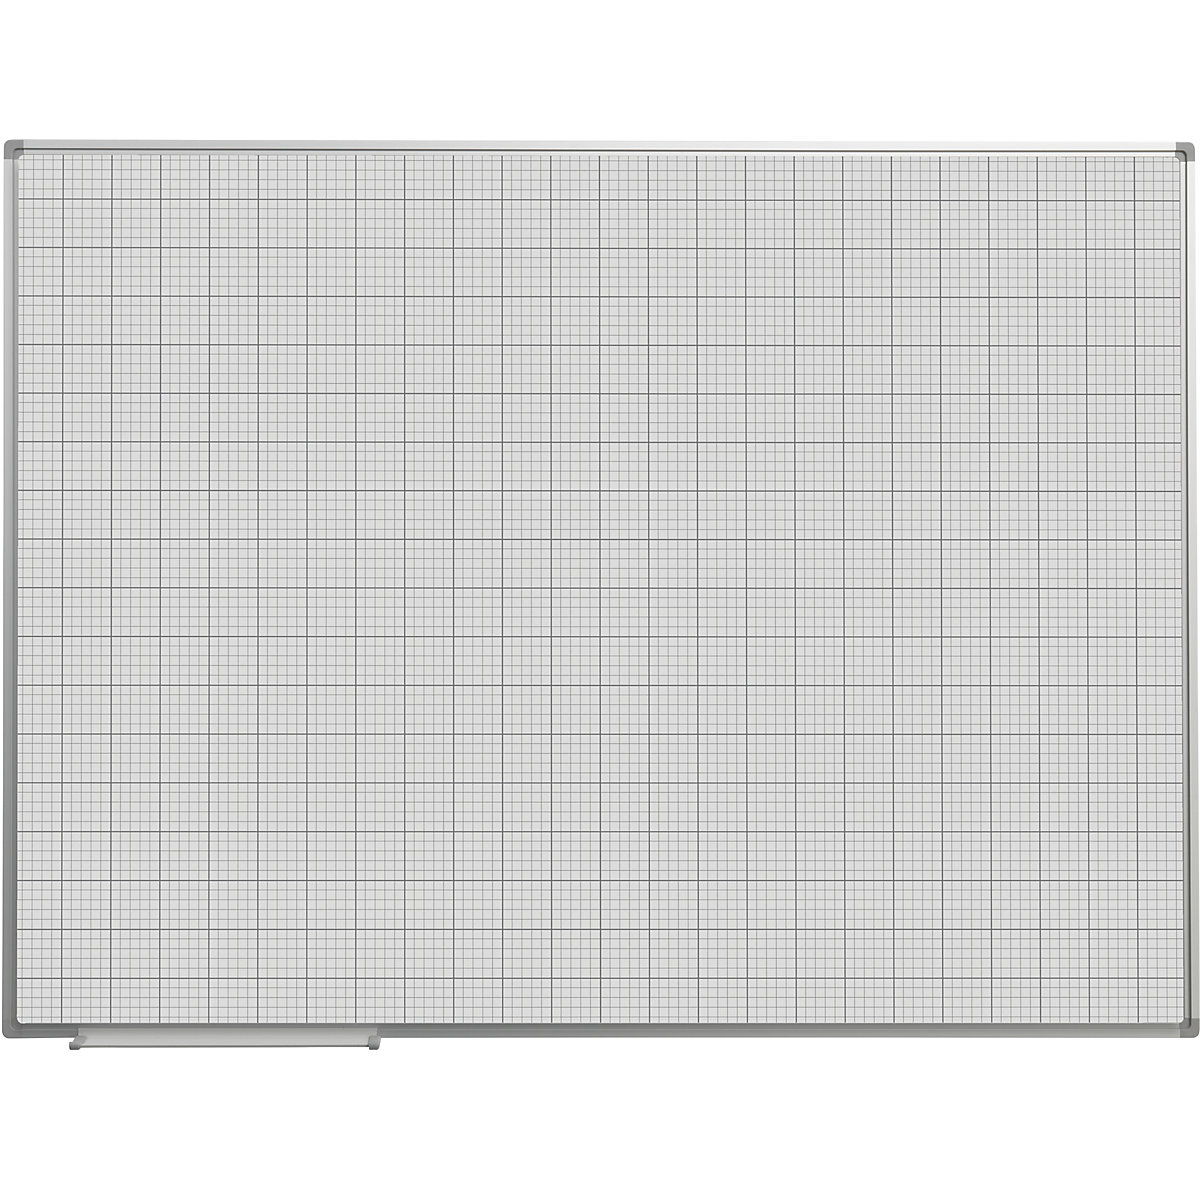 Rastrová tabule – eurokraft basic, bílý lak, š x v 1200 x 900 mm, rastr 10 x 10 / 50 x 50 mm-6